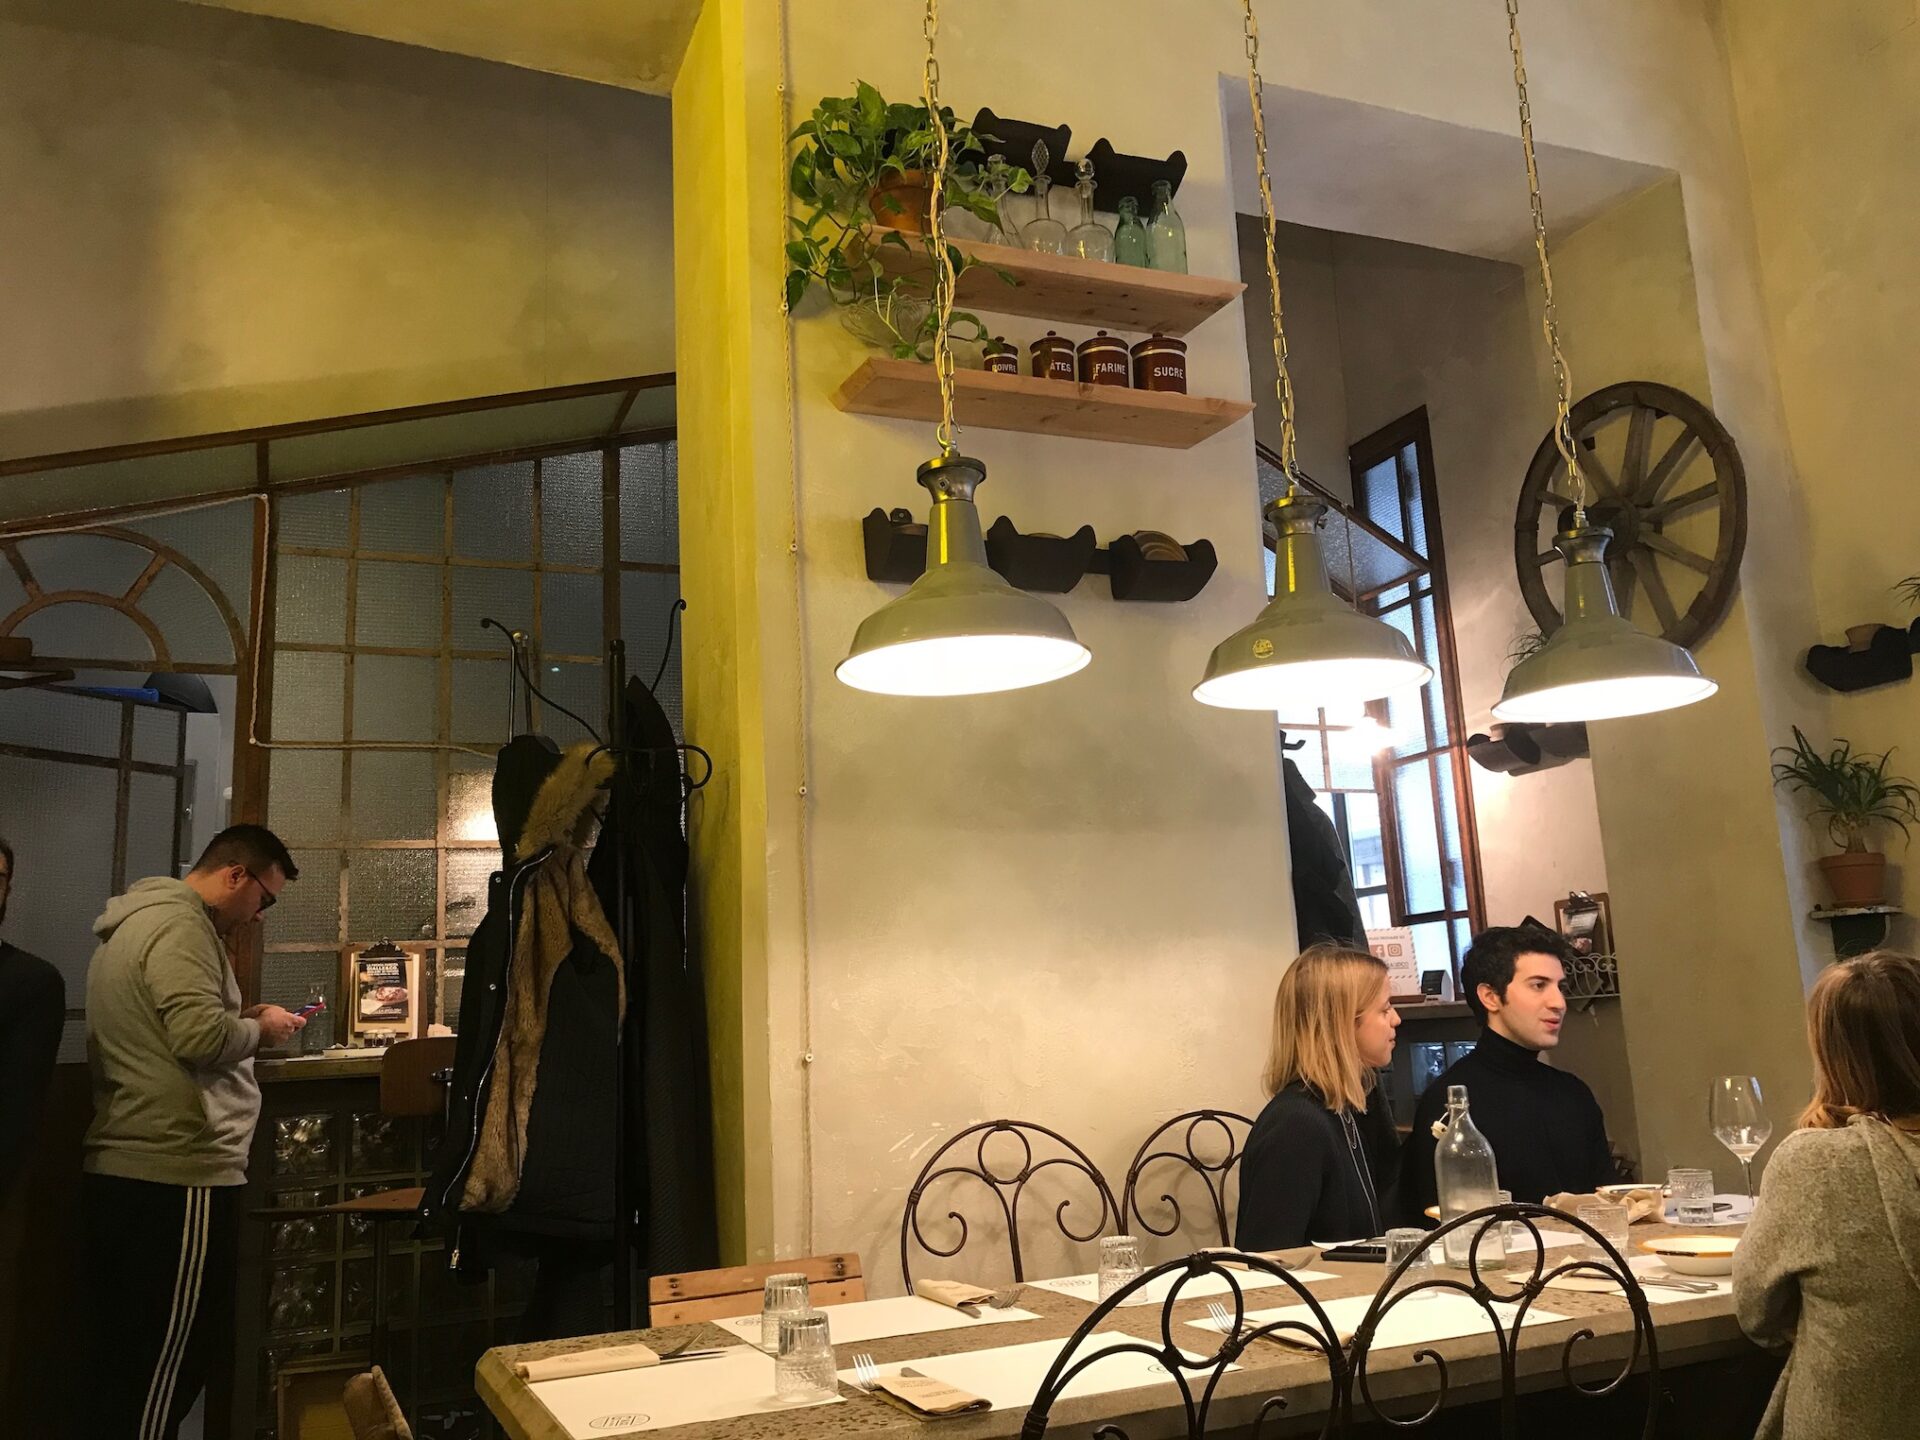 A Milano da Gialle&Co le baked potatoes all'italiana in tante versioni, anche finger food